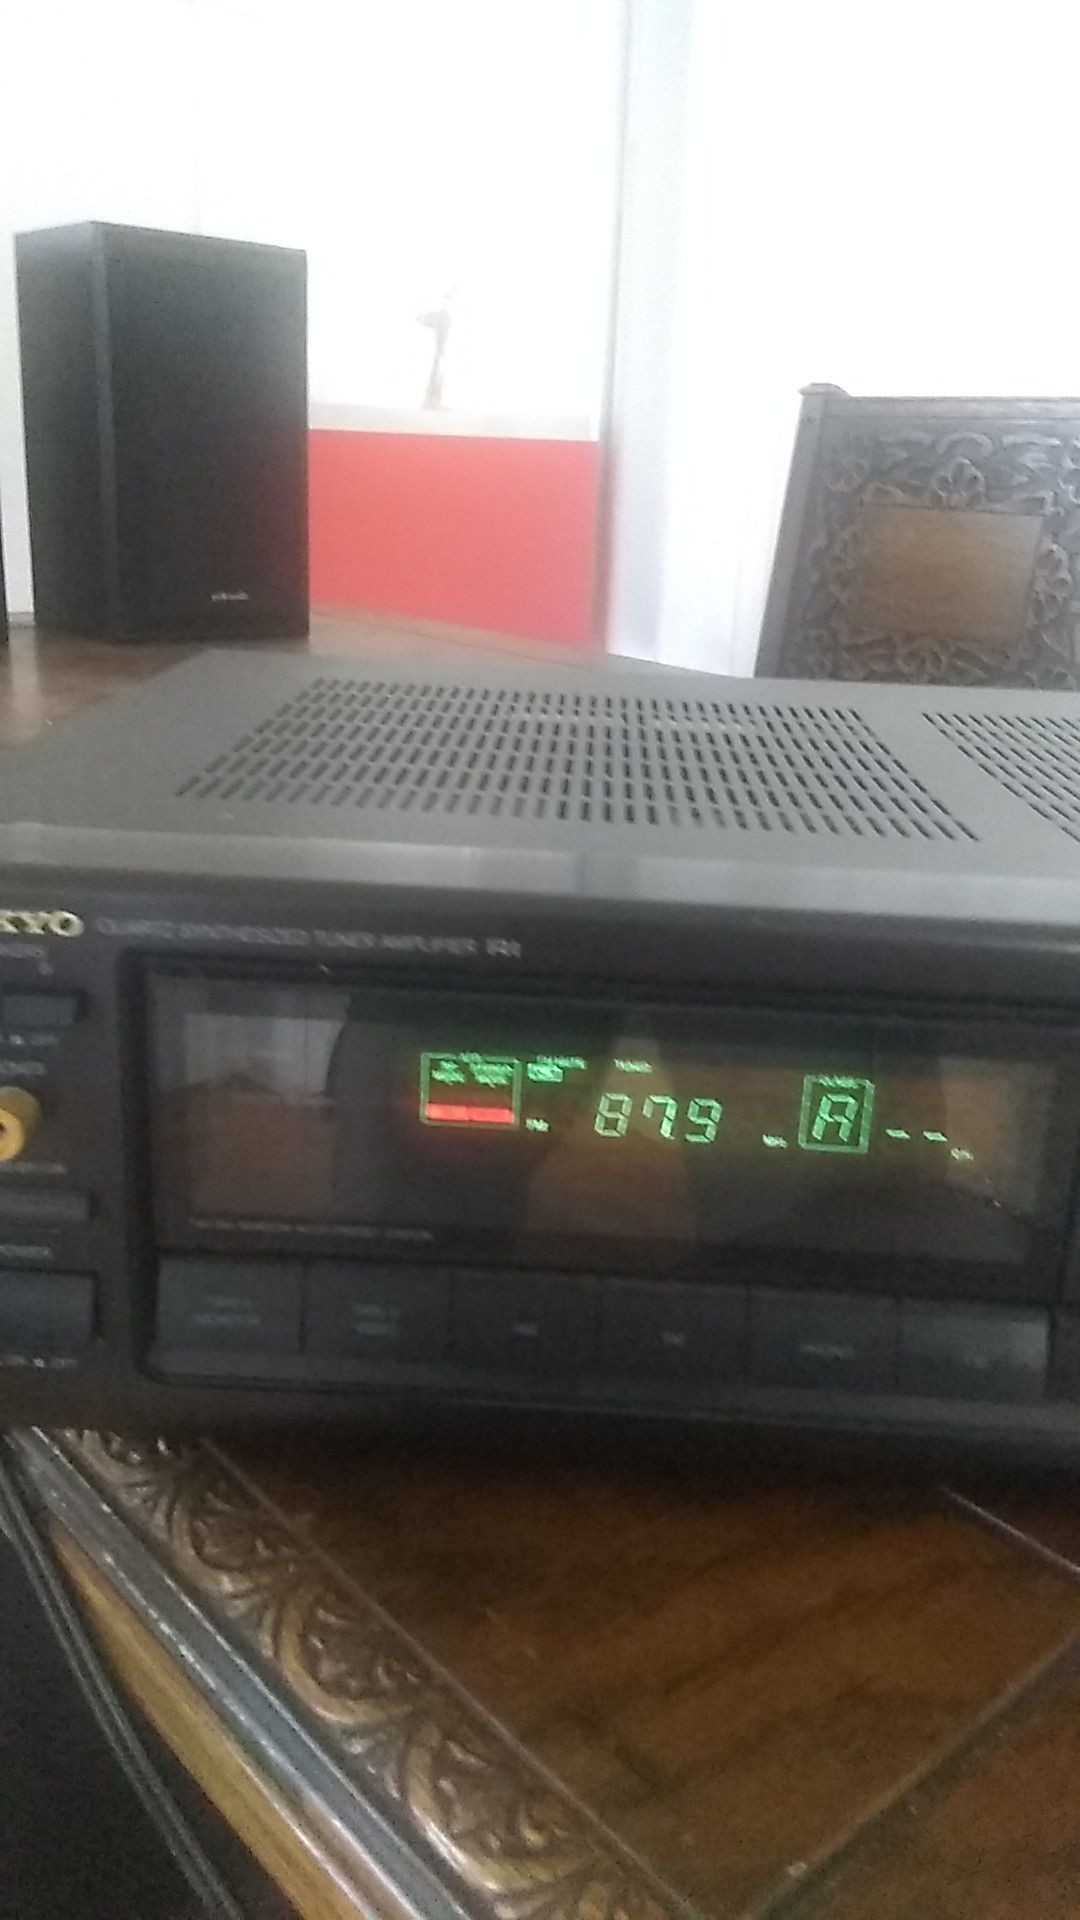 Onkyo TX-910 stereo receiver